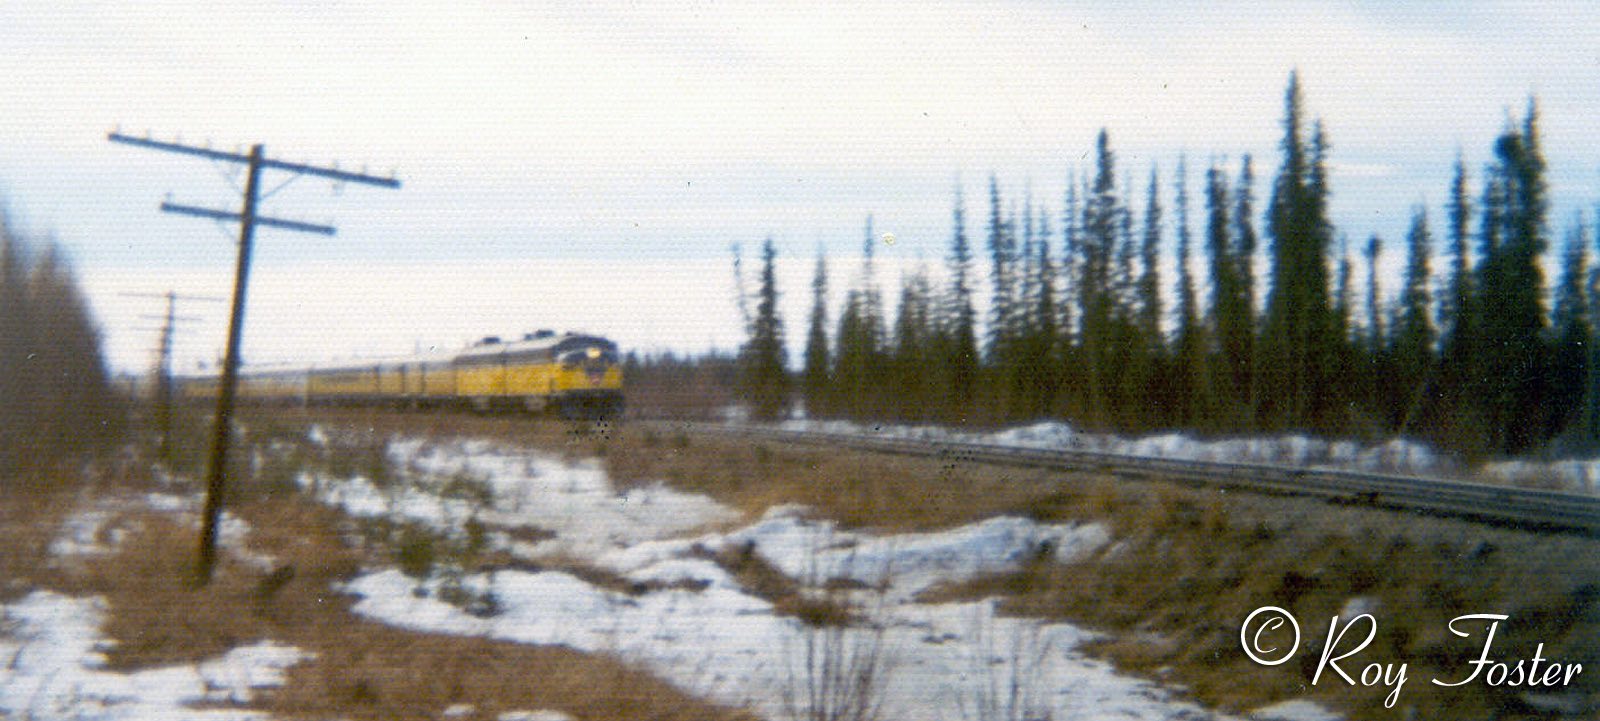 Train #5, Apr. 8, 1973